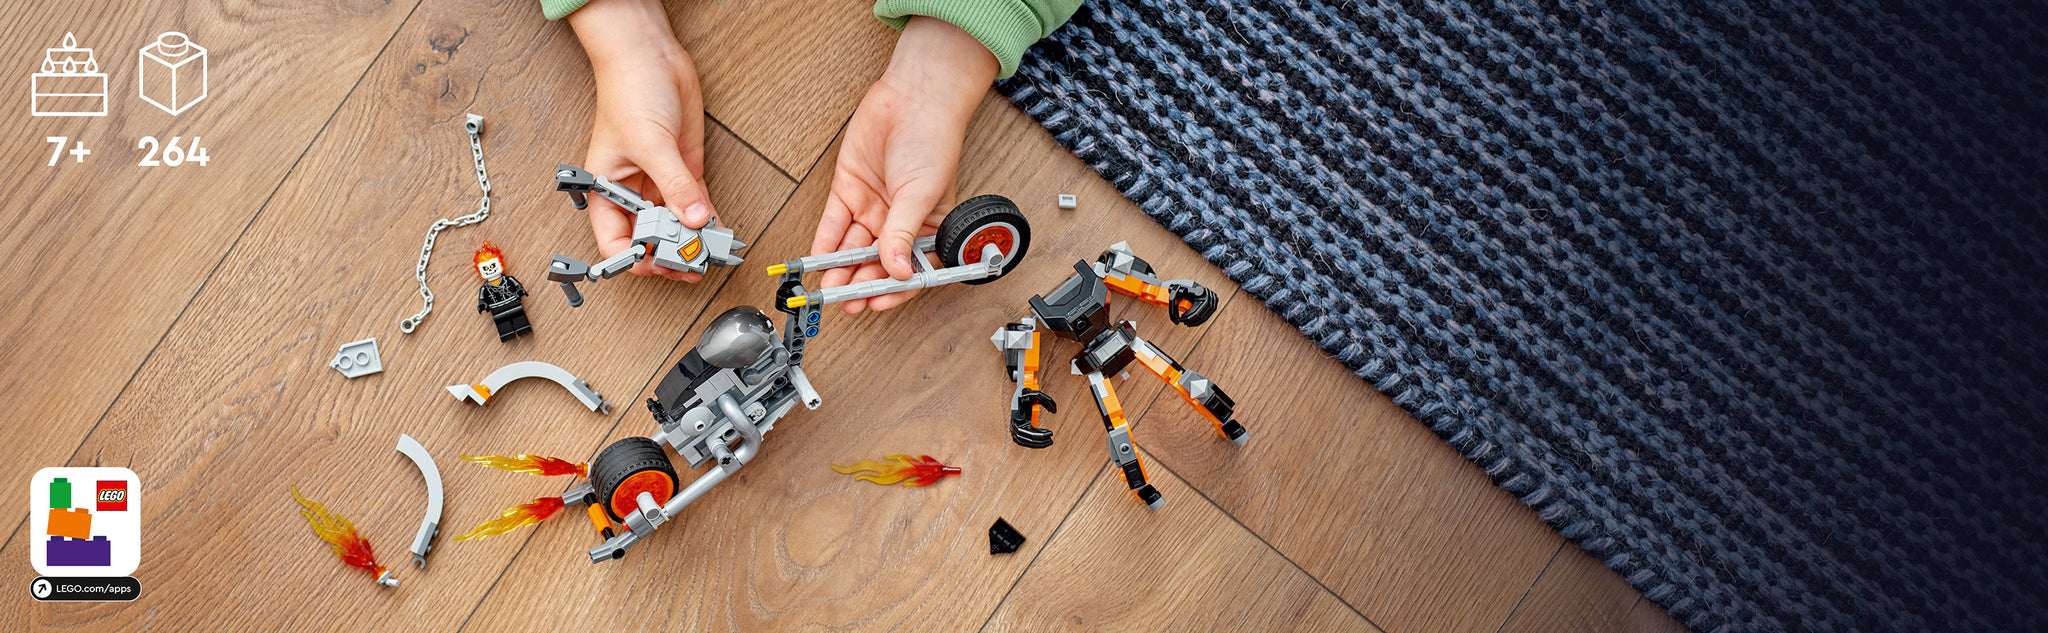 LEGO 76245 Ghost Rider Mech & motor